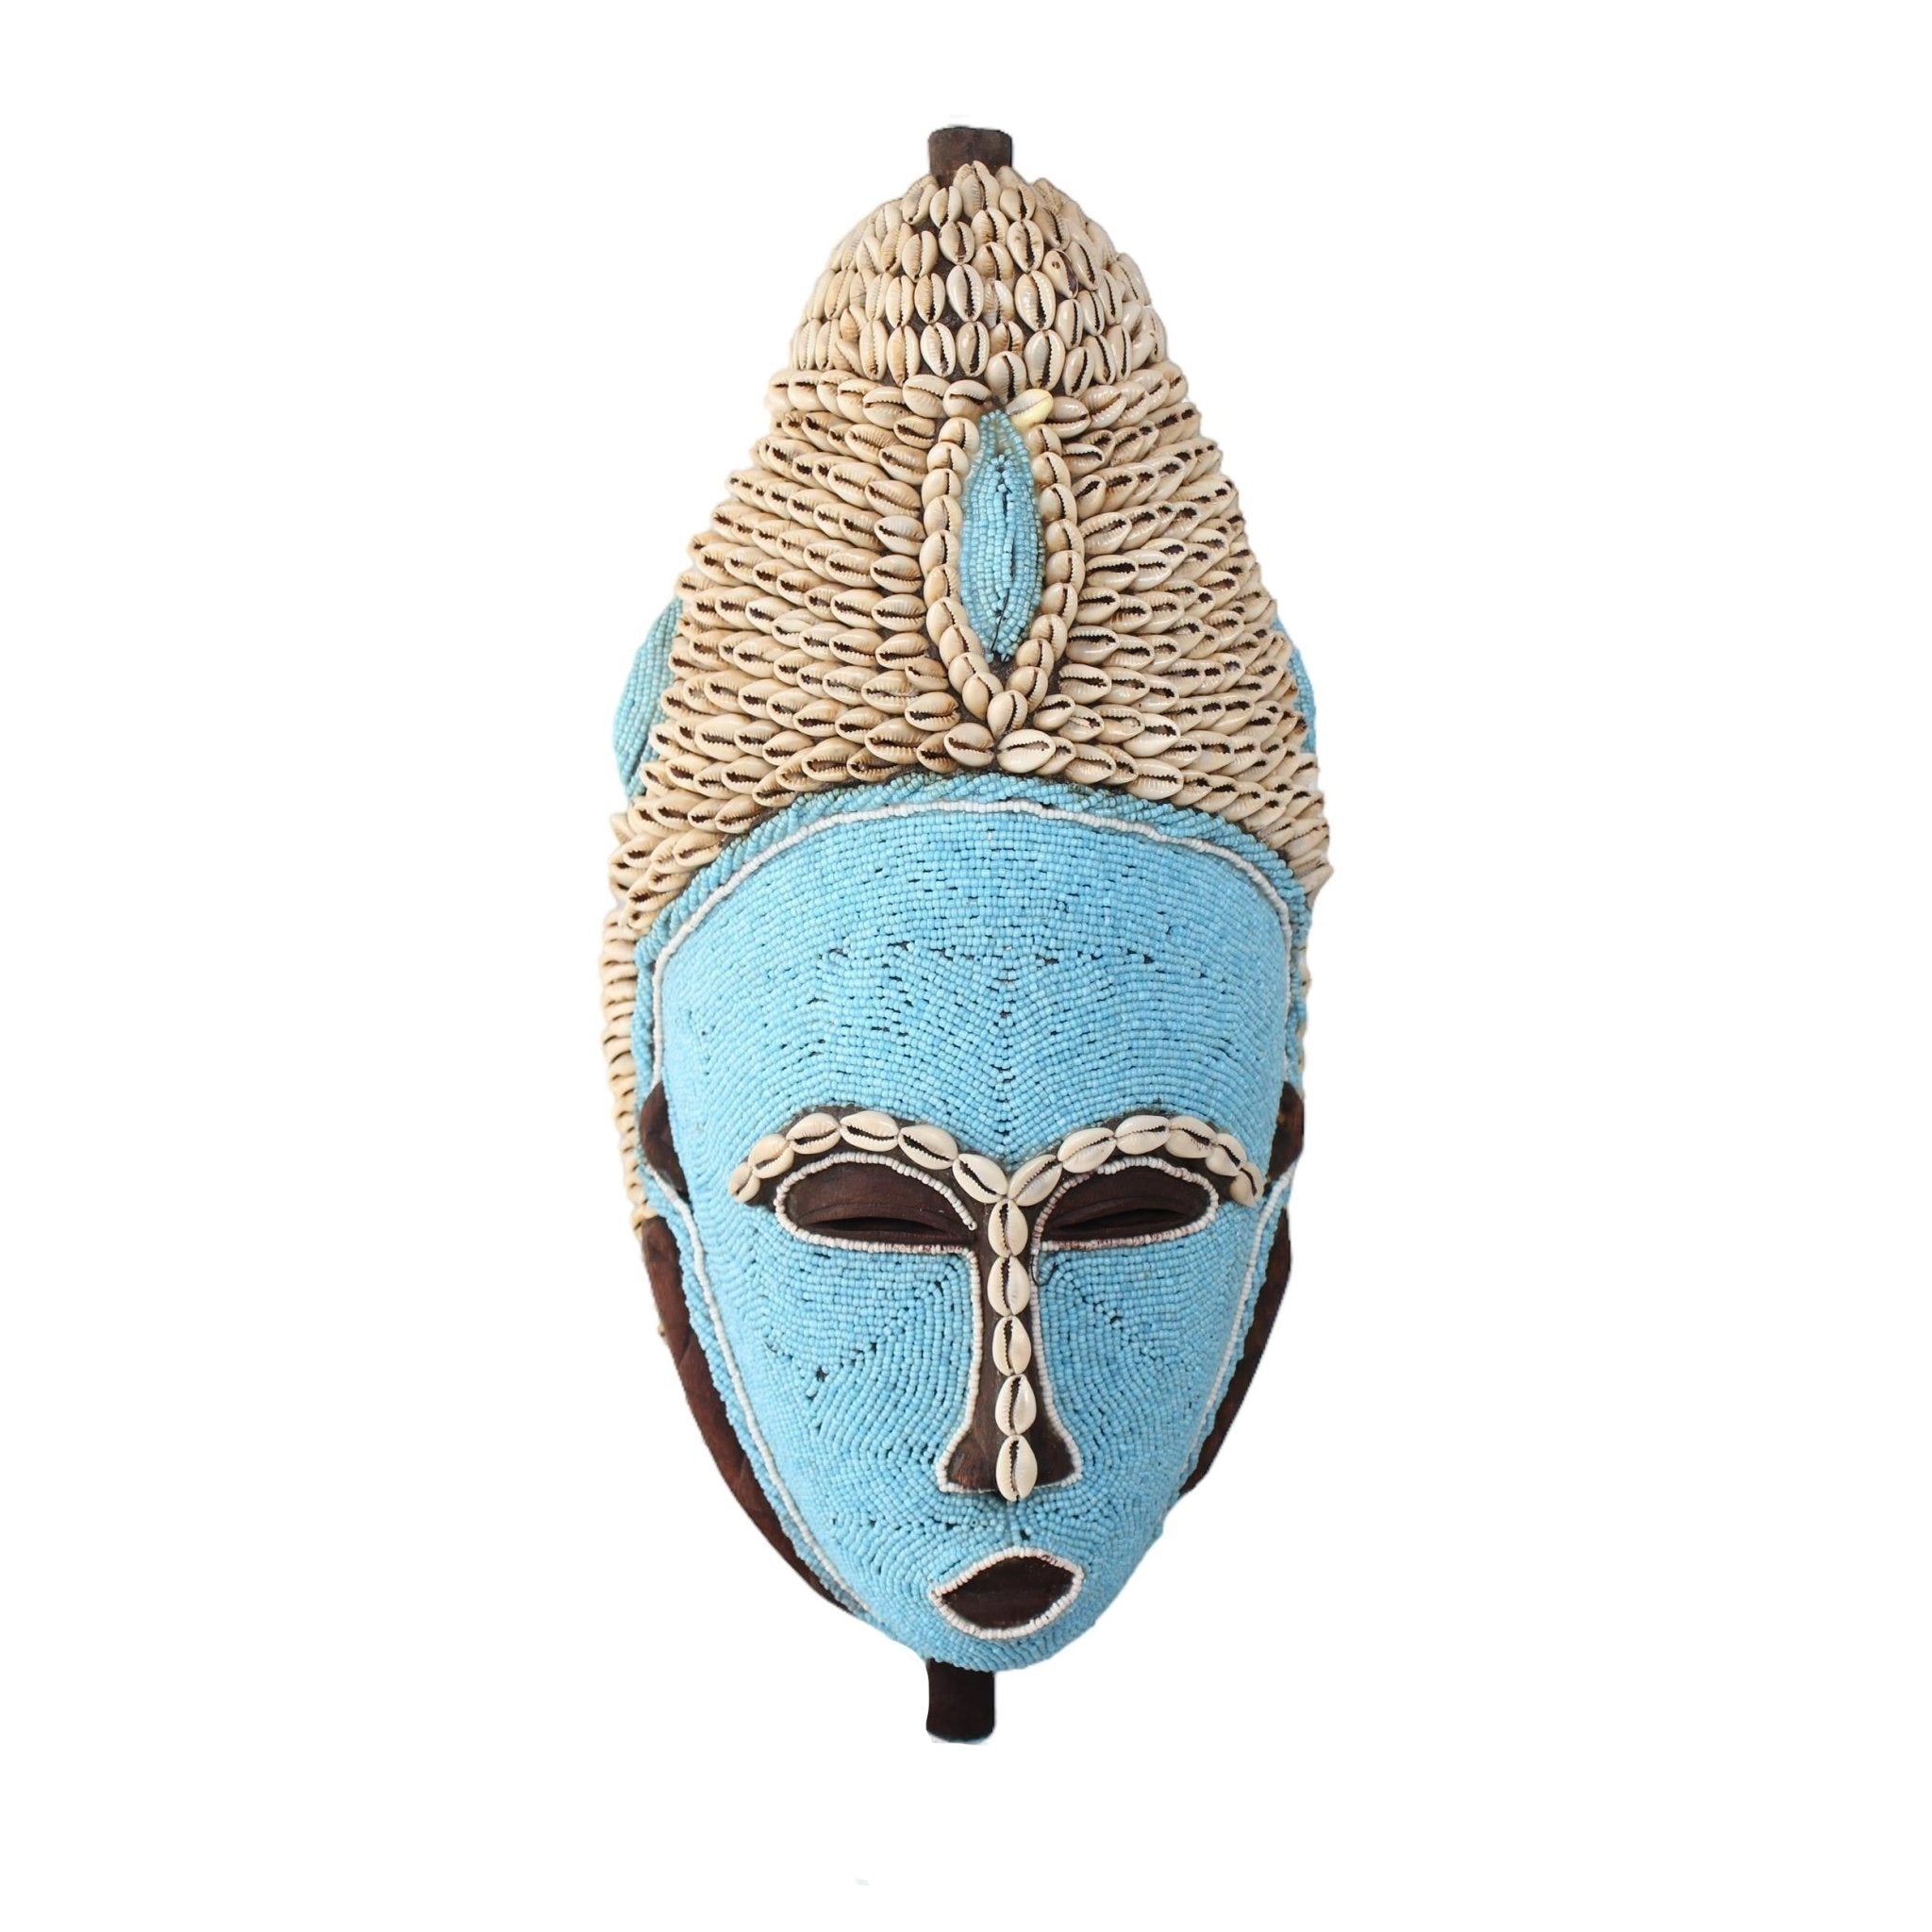 Baule Tribe Mask ~18.1" Tall - African Angel Art - Mask